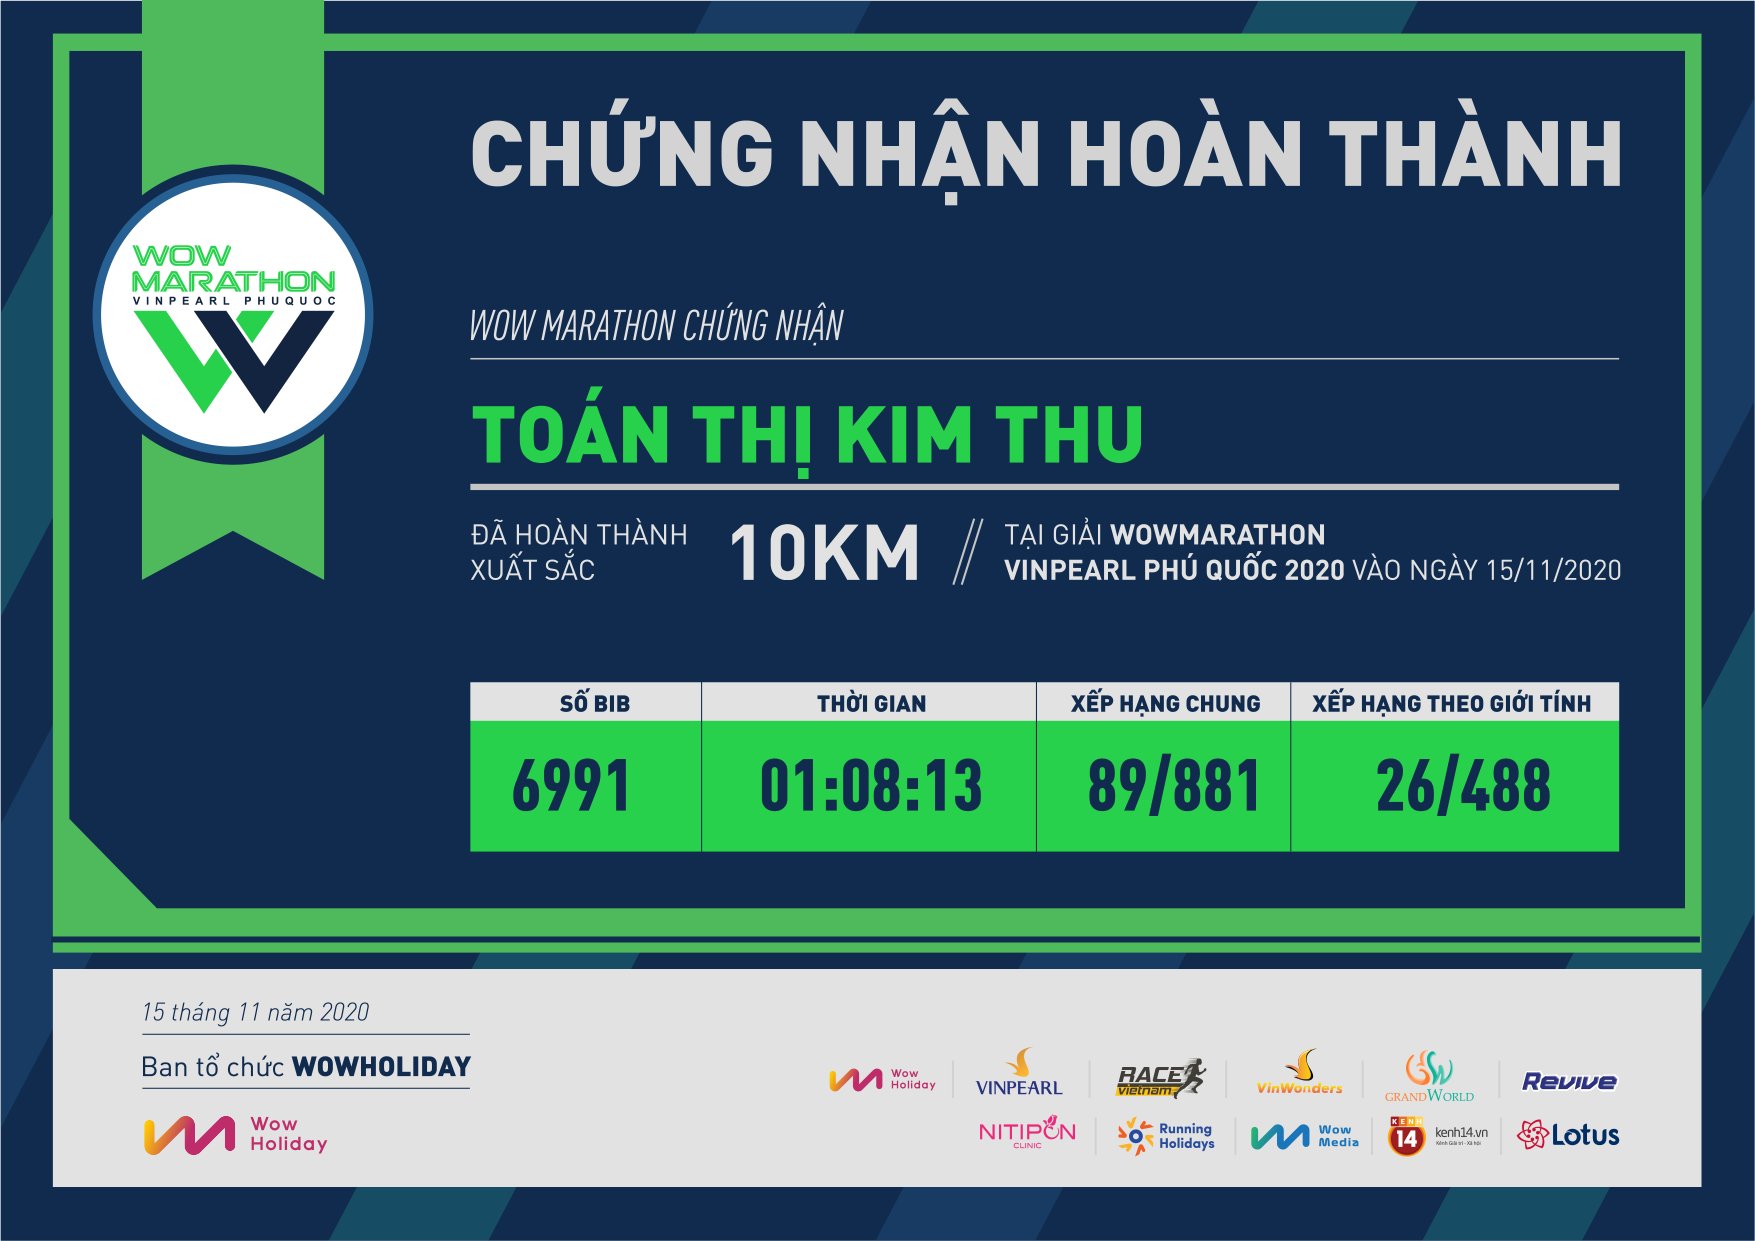 6991 - Toán Thị Kim Thu